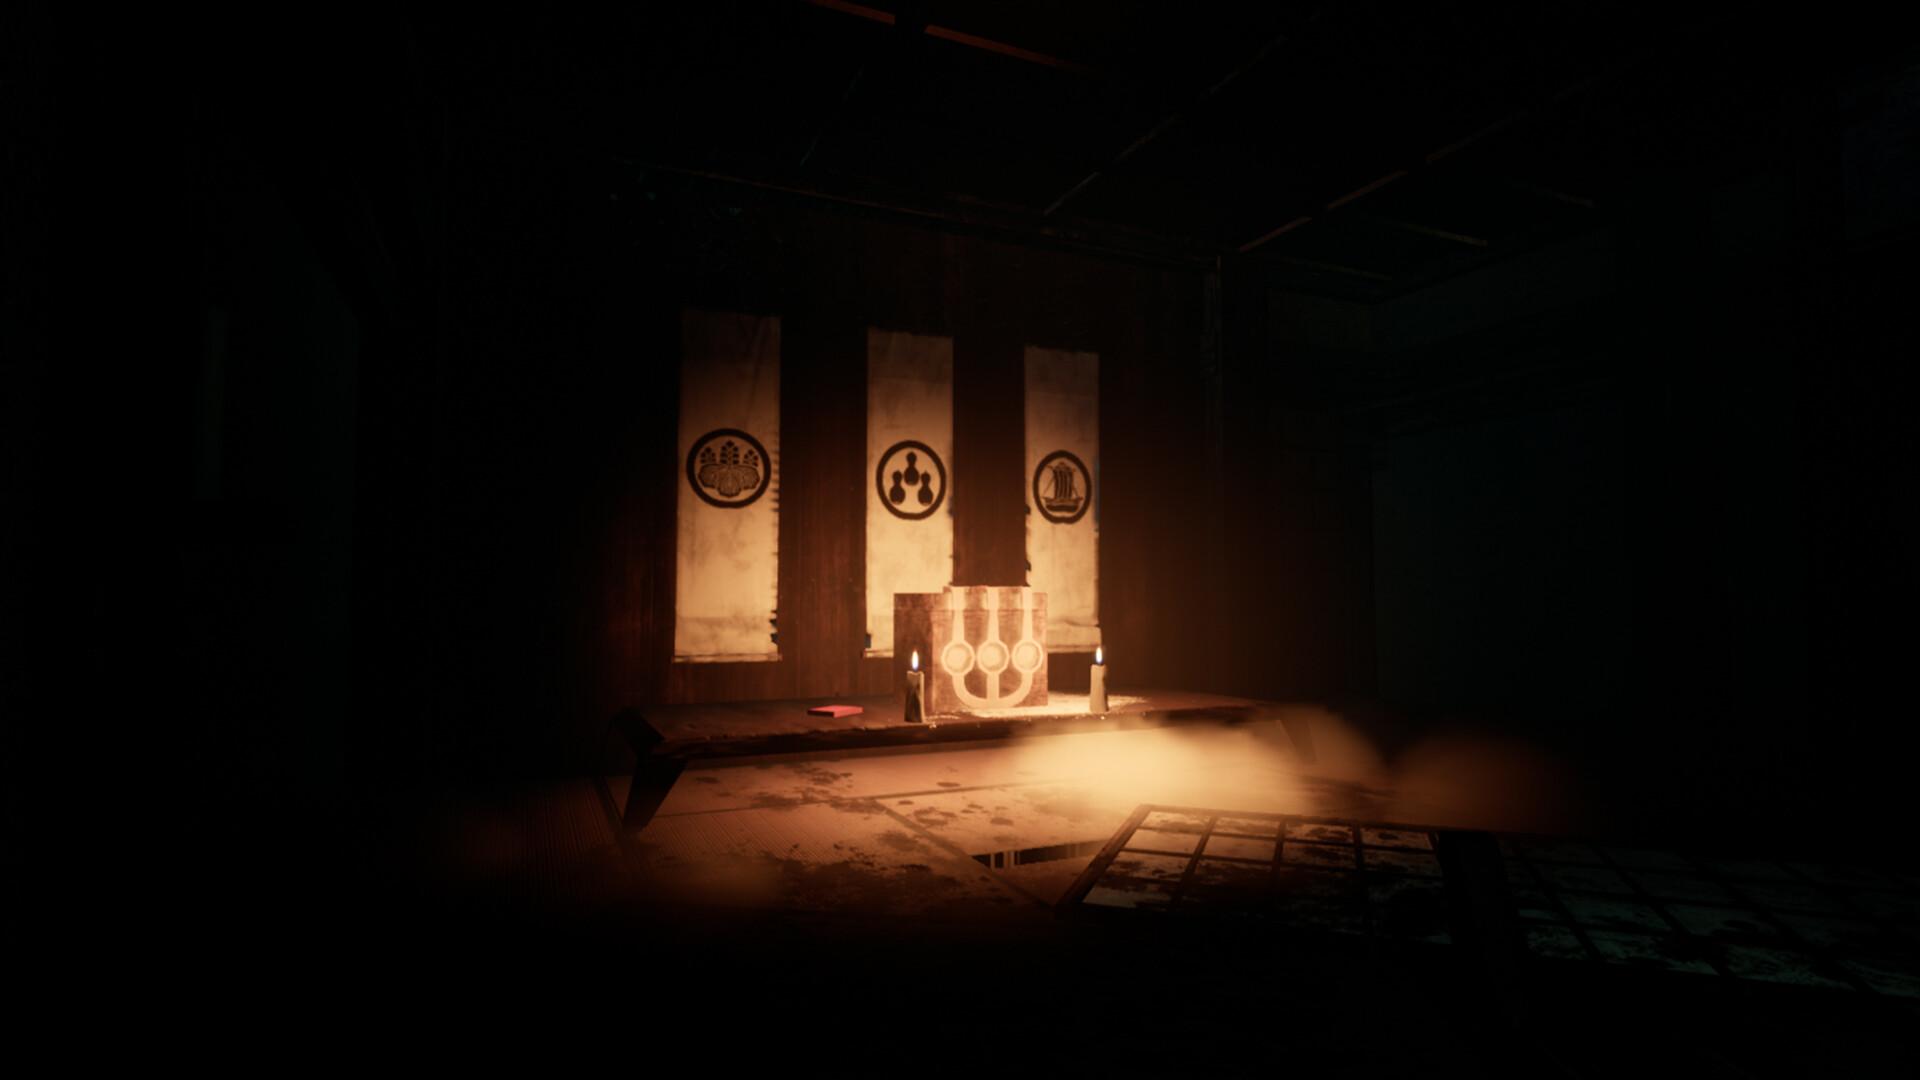 Screenshot №1 from game Malice